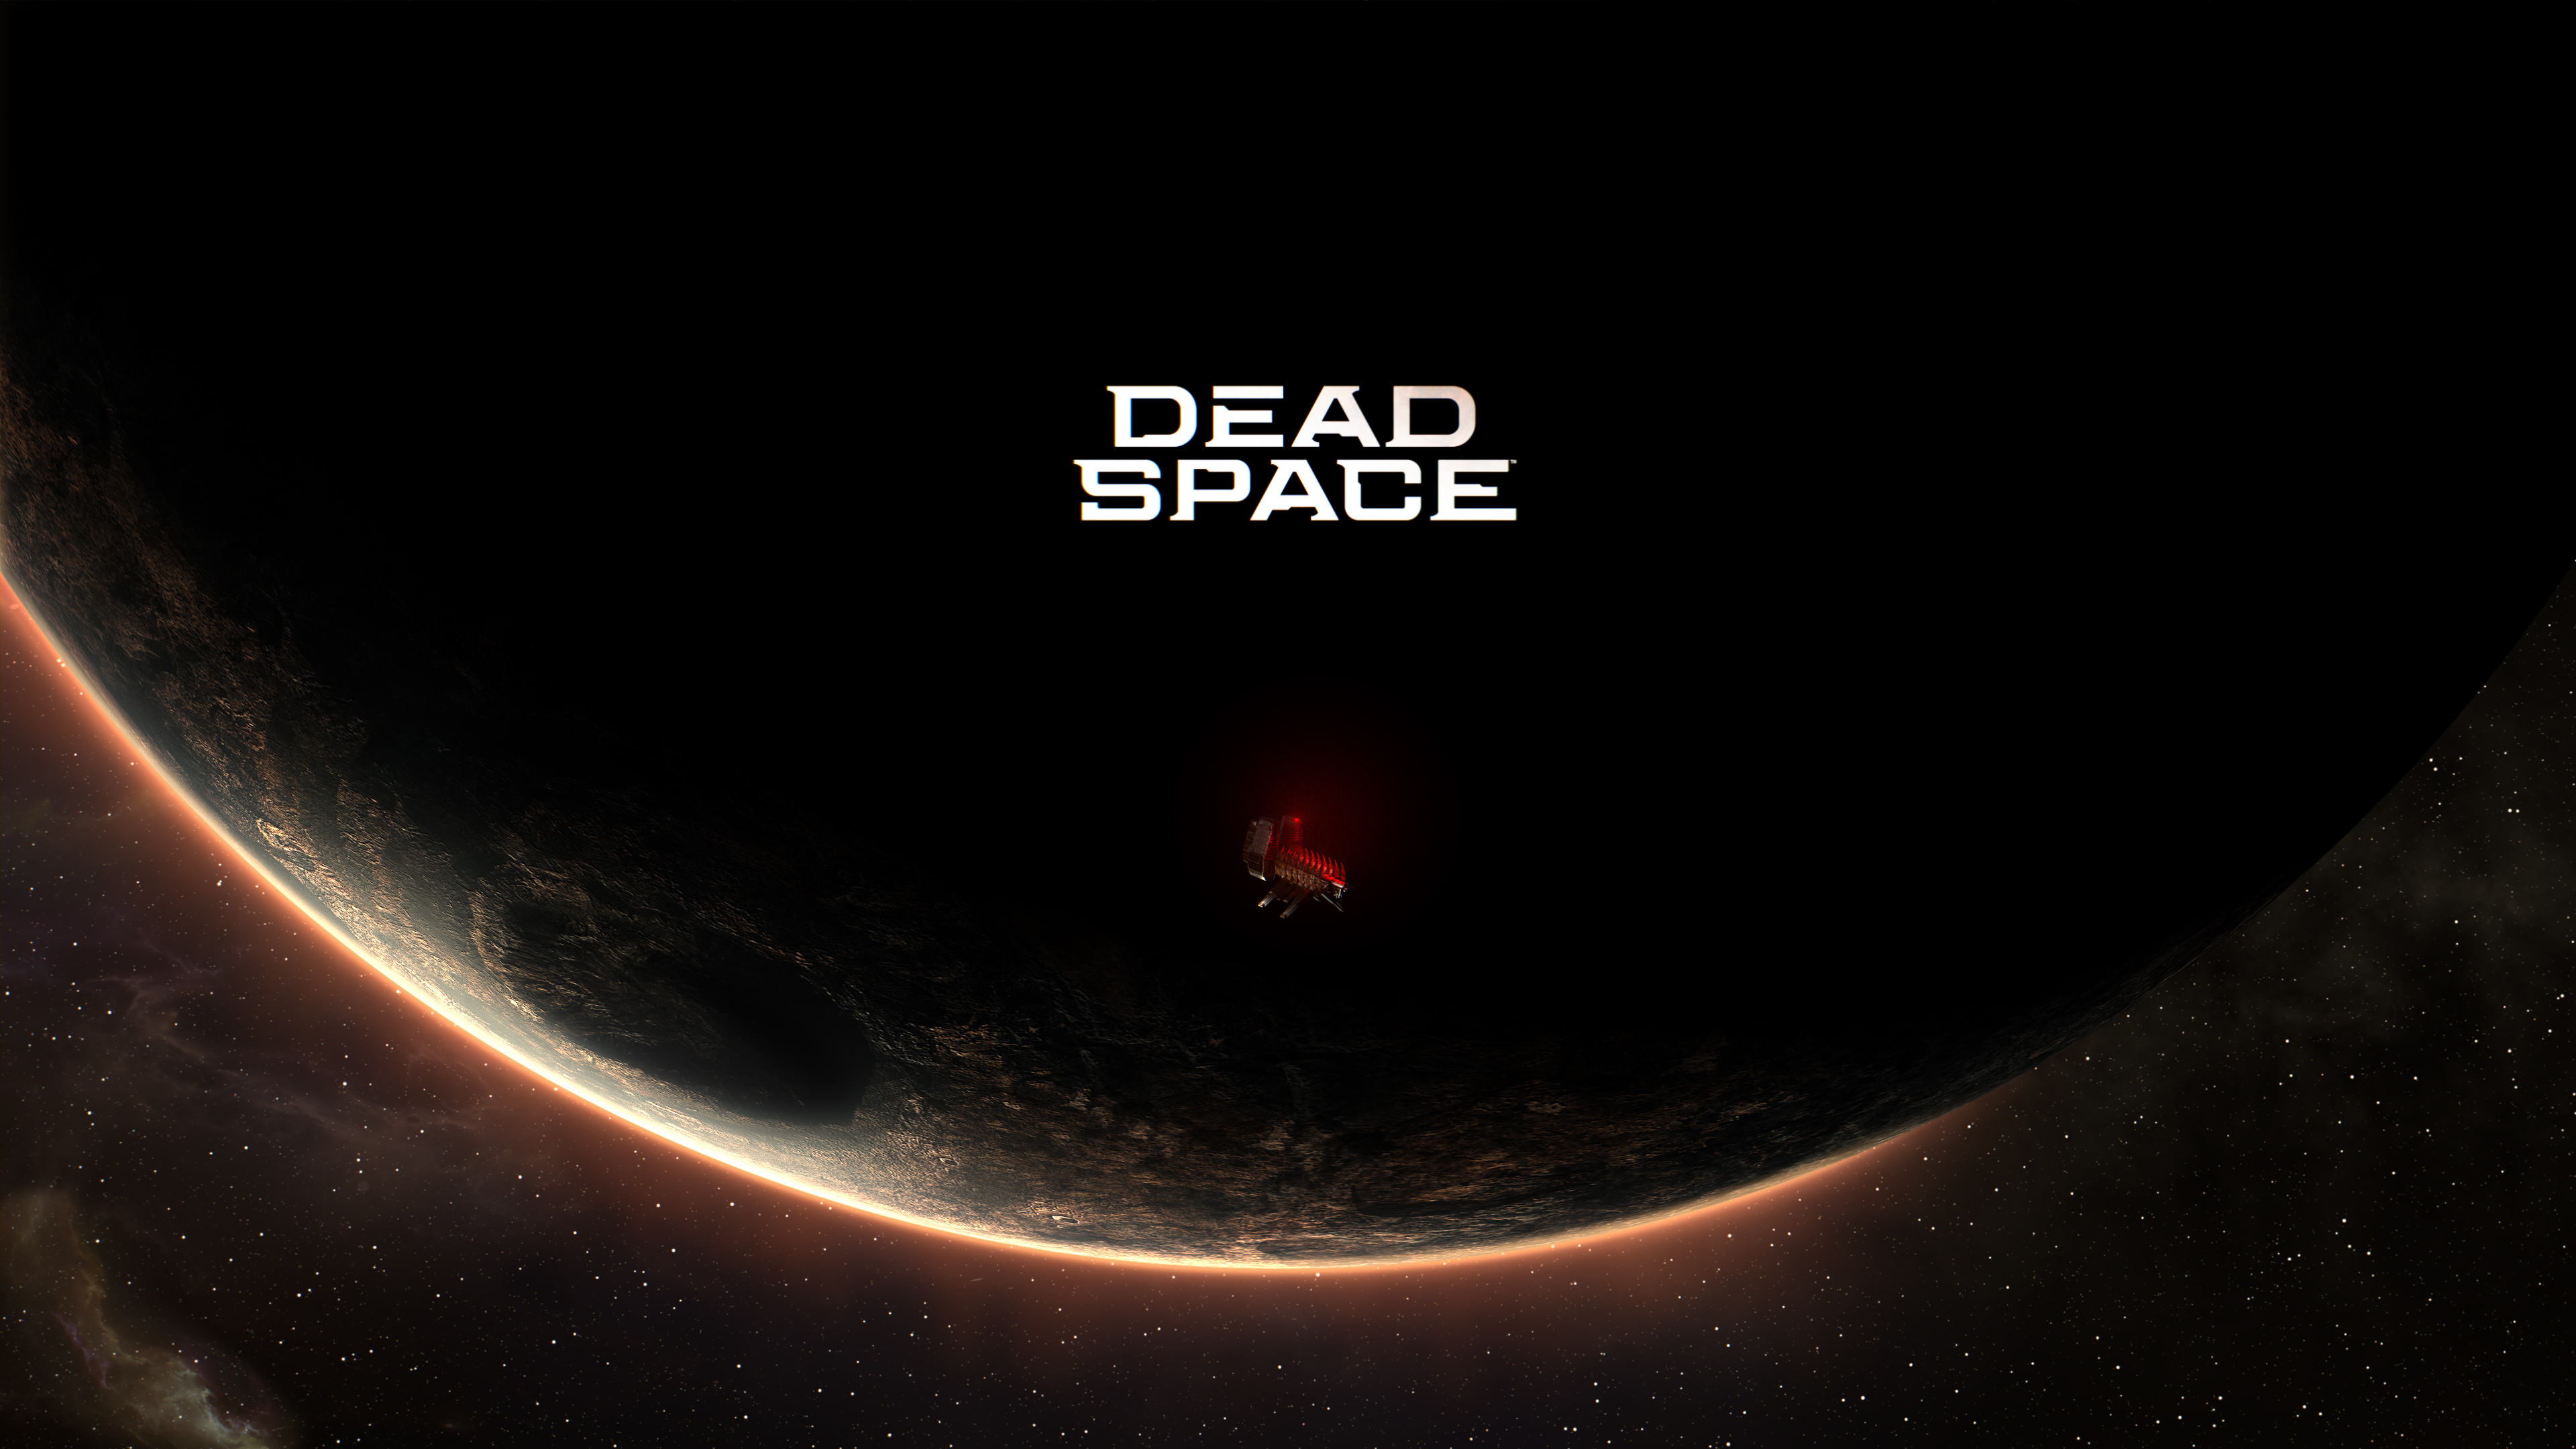 Dead Space 2 remake dreams draw closer to reality amid EA survey